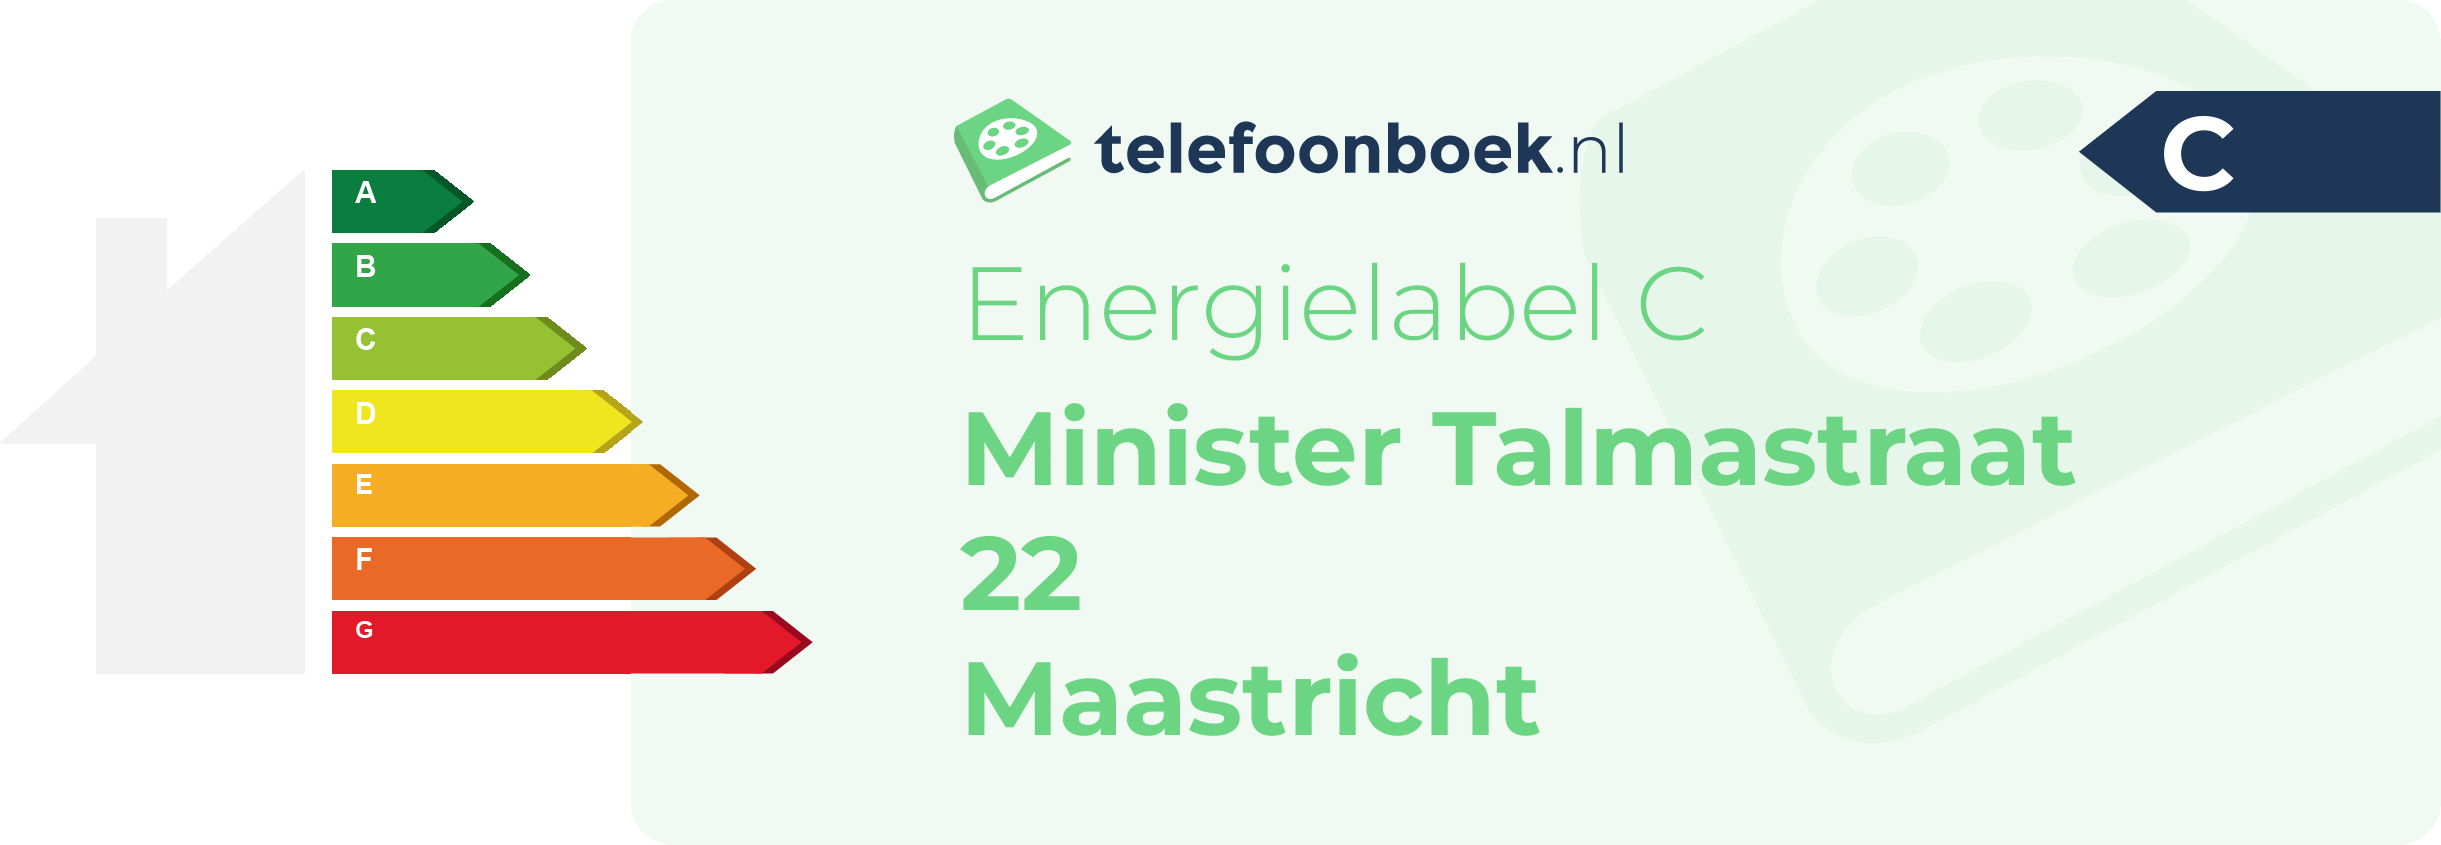 Energielabel Minister Talmastraat 22 Maastricht